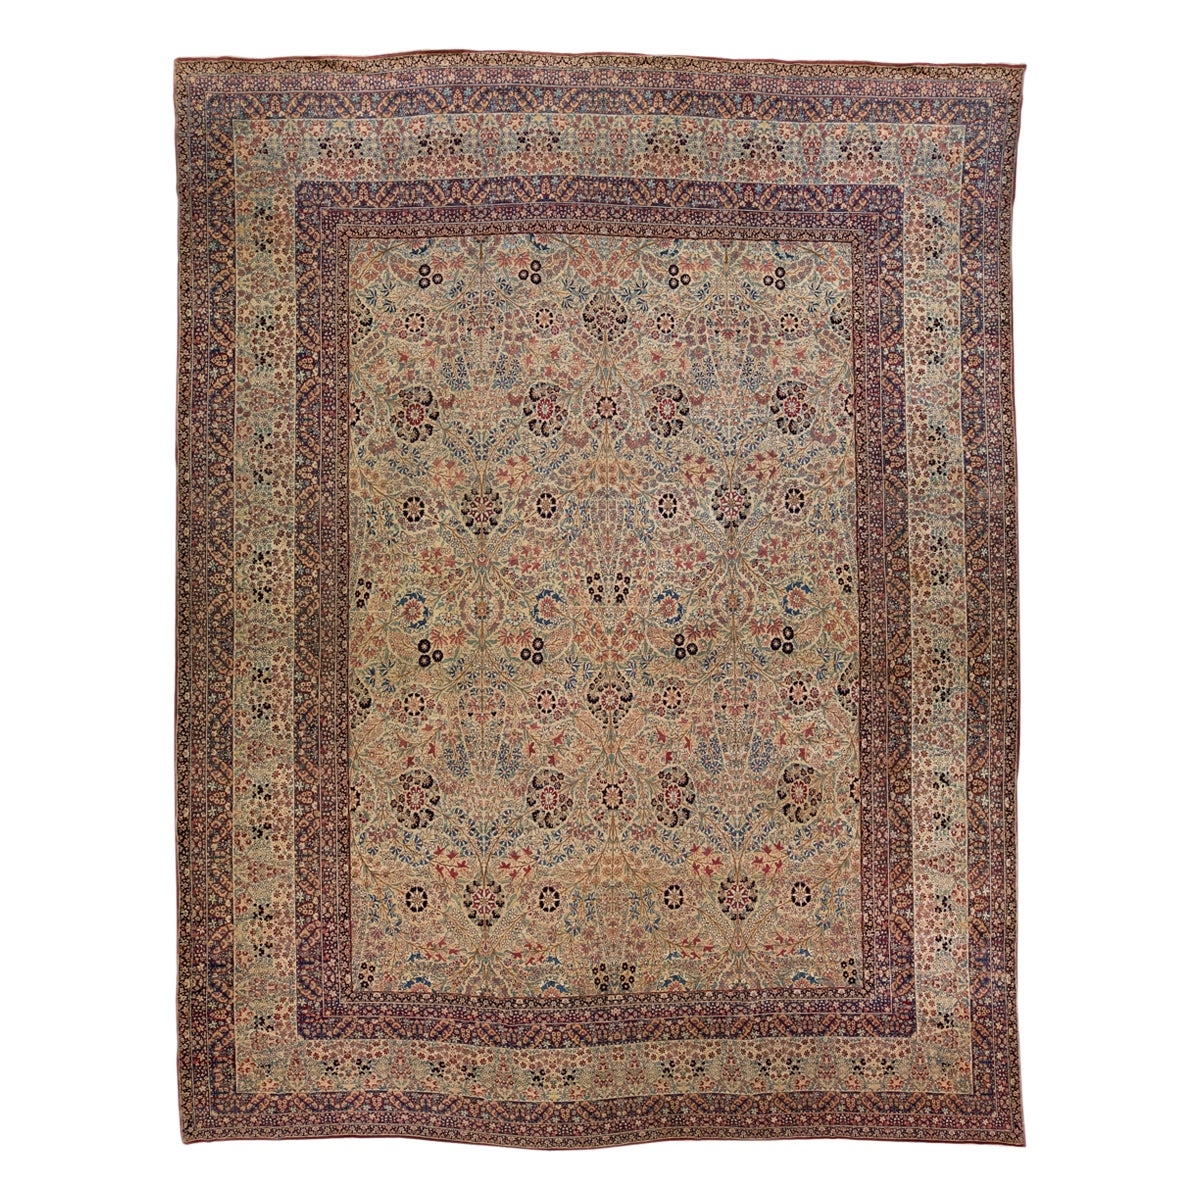 Antique Kerman Handmade Beige Persian Wool Rug with Allover Floral Pattern